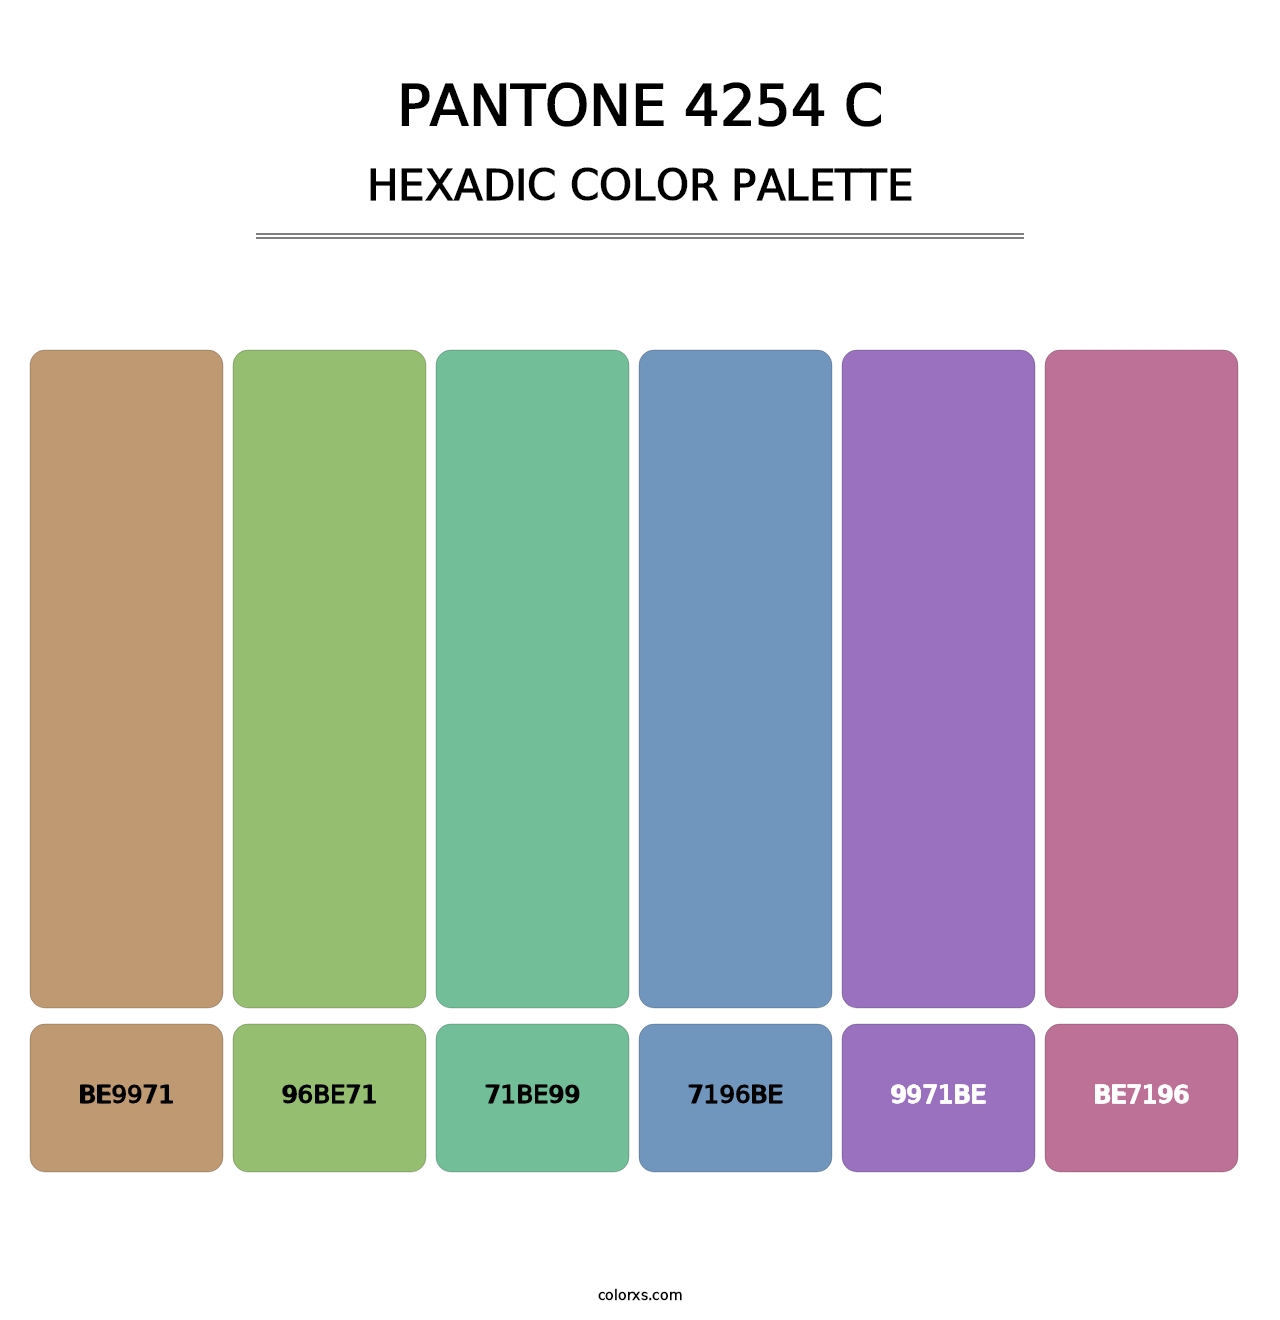 PANTONE 4254 C - Hexadic Color Palette